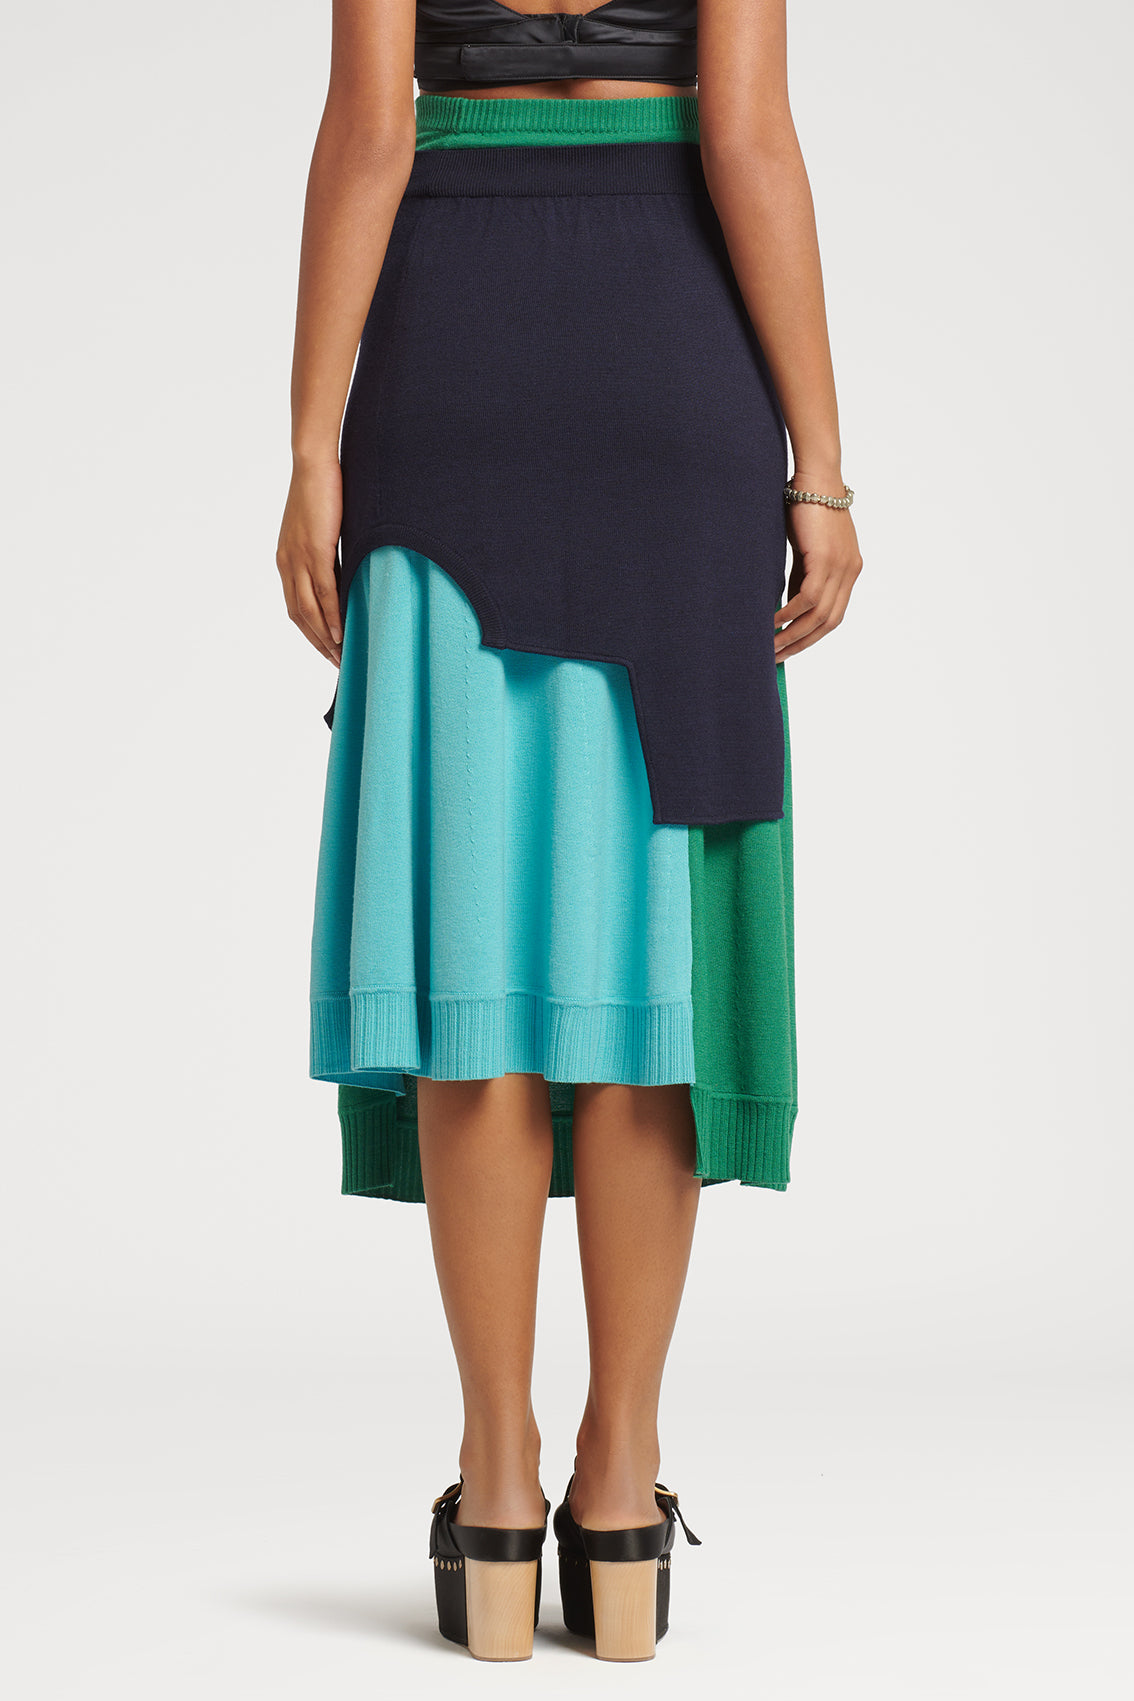 Colour Block Multi-Layer Skirt